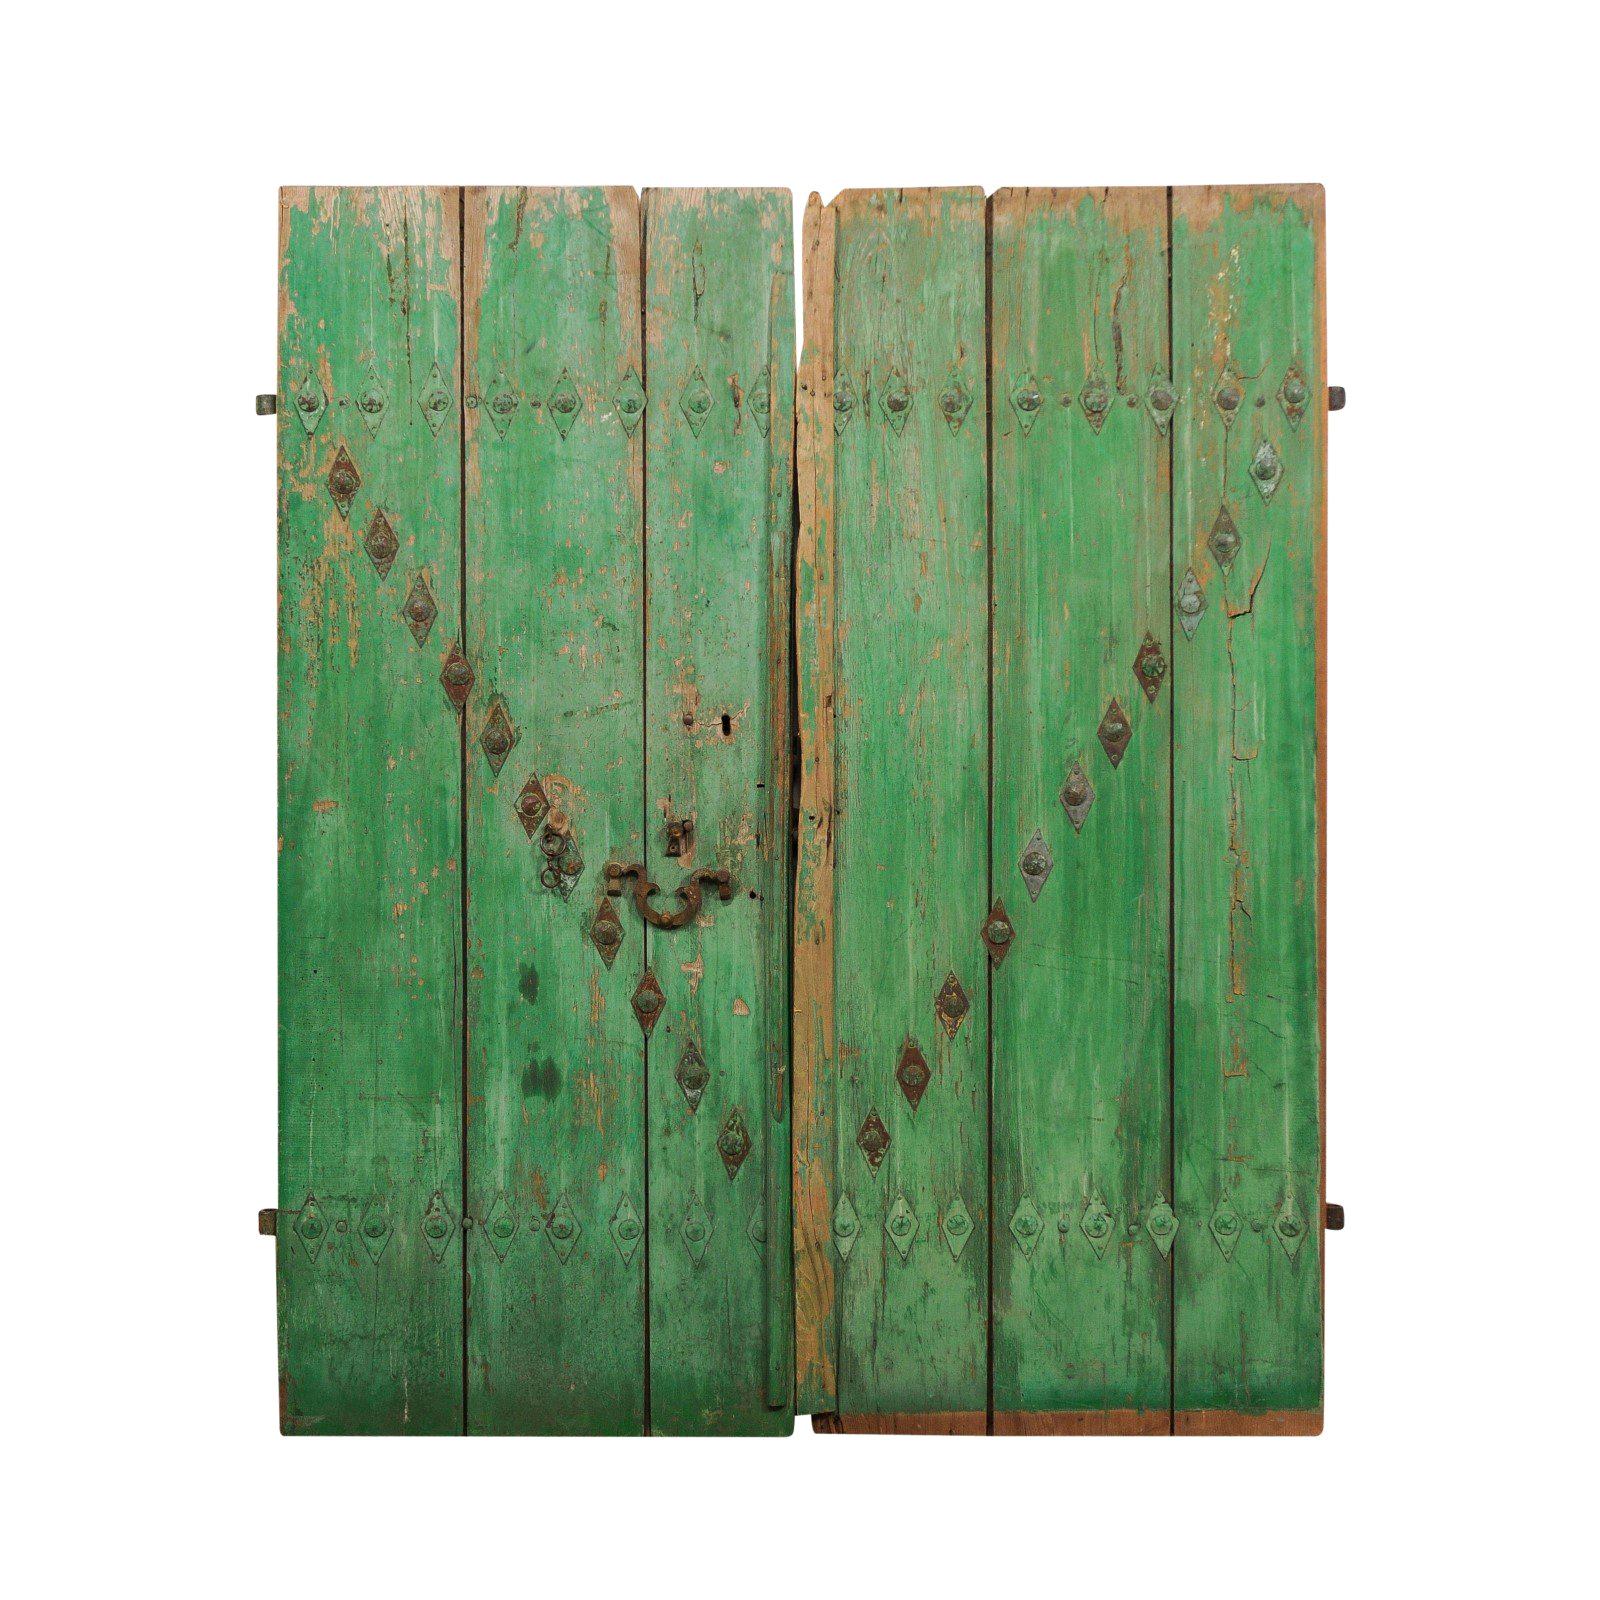 Spanish Pair Early 19th C. Wooden Doors w/Original Iron Hardware, 6.75 Ft Tall